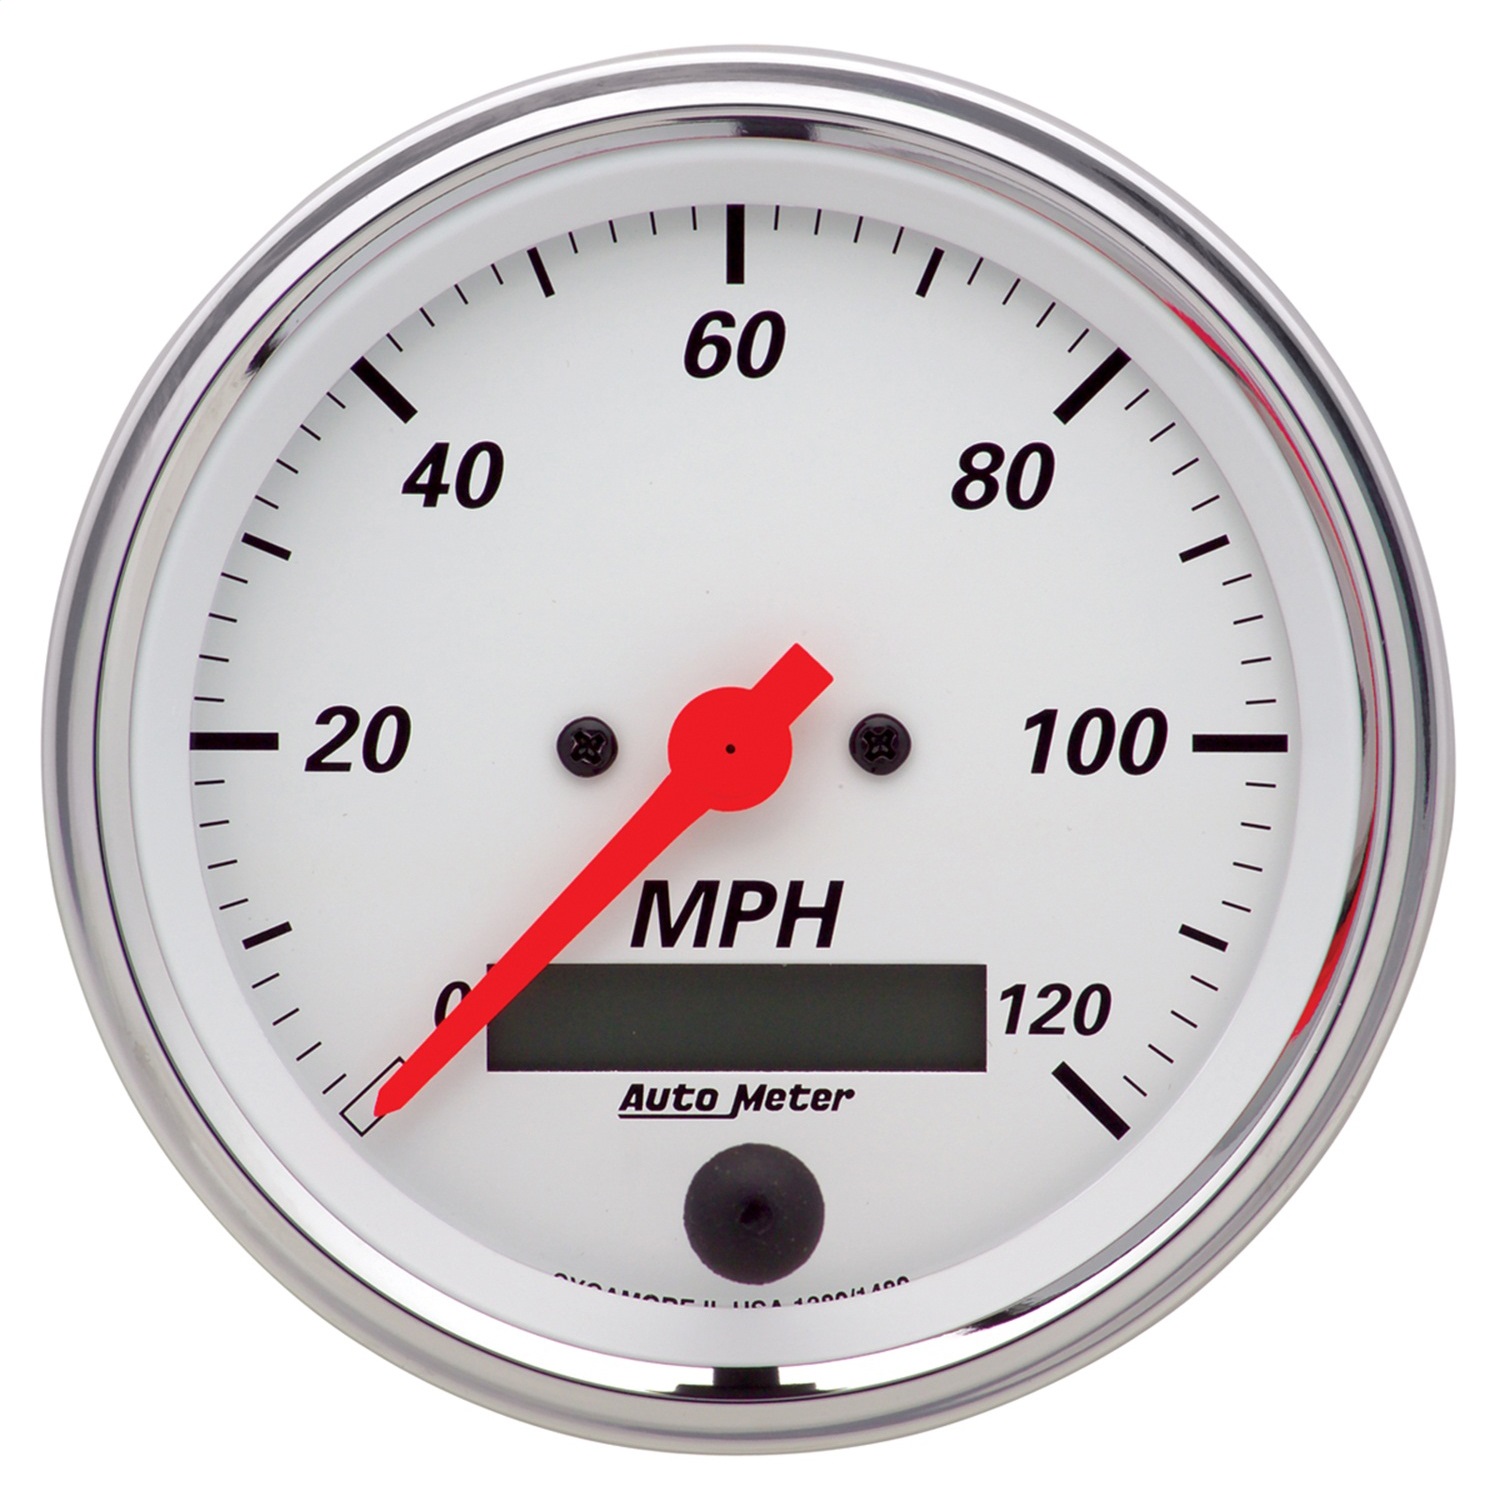 Auto Meter Auto Meter 1380 Arctic White; Electric Programmable Speedometer